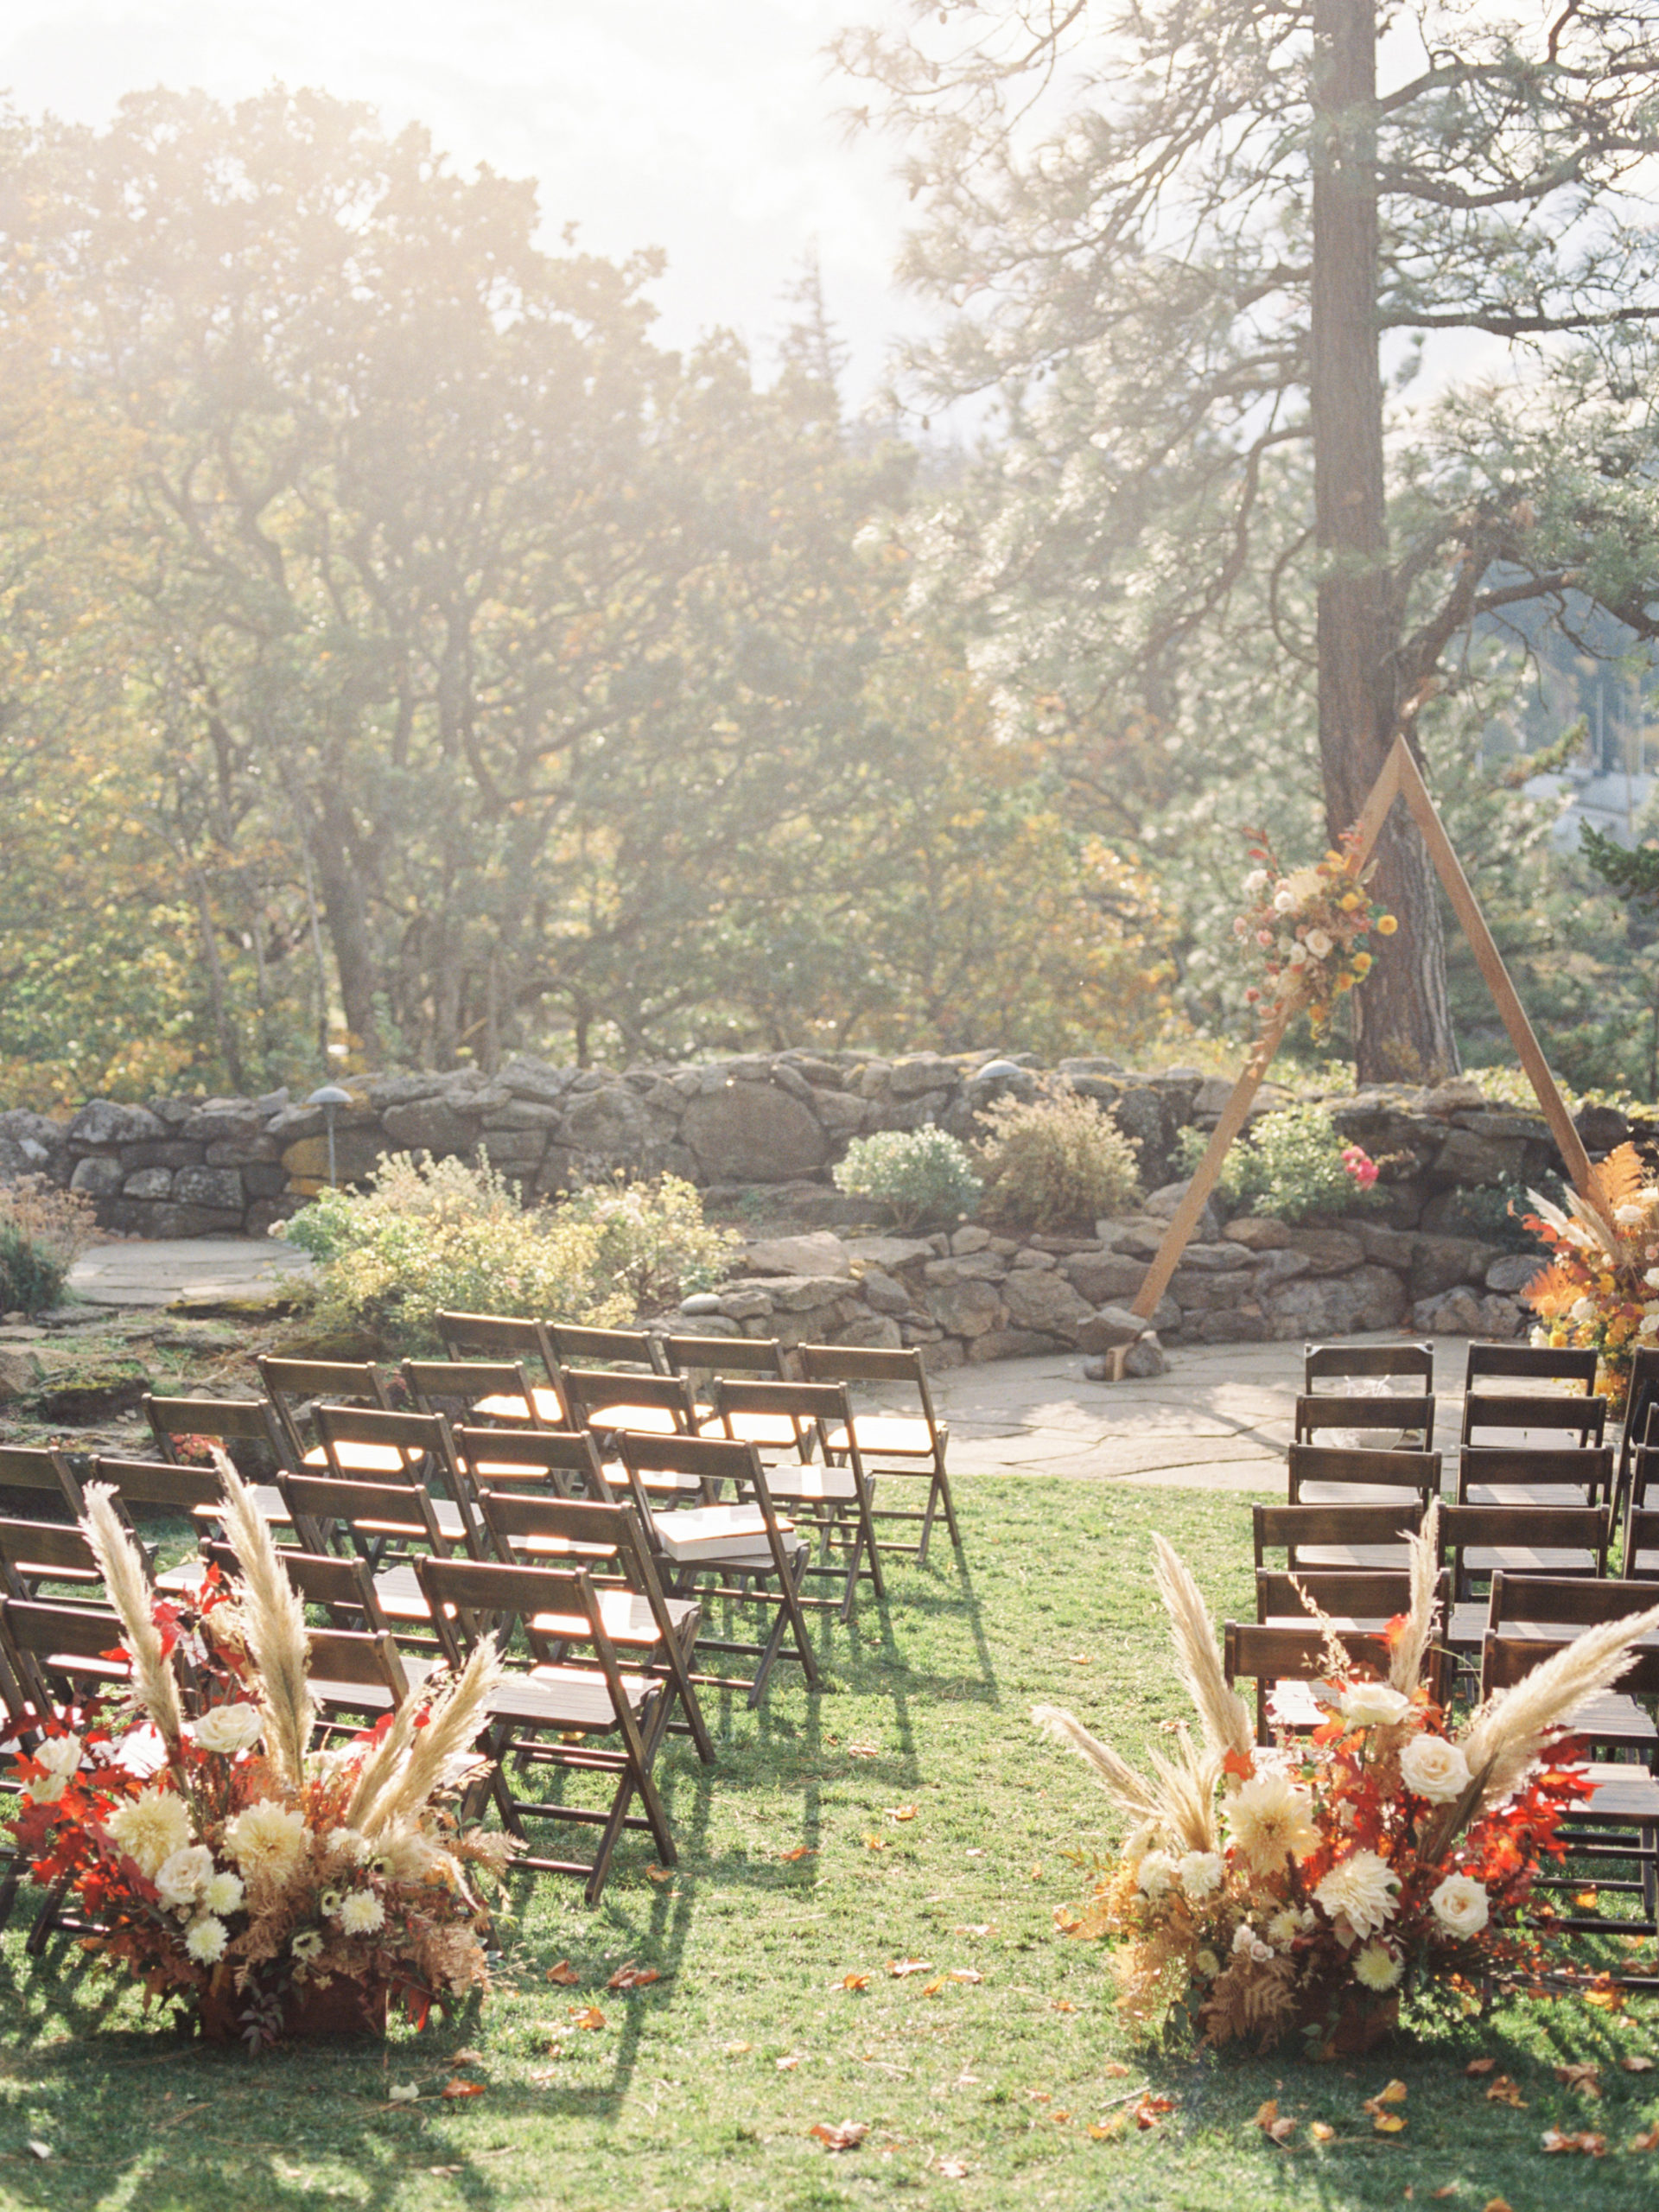 Plan a perfect fall wedding